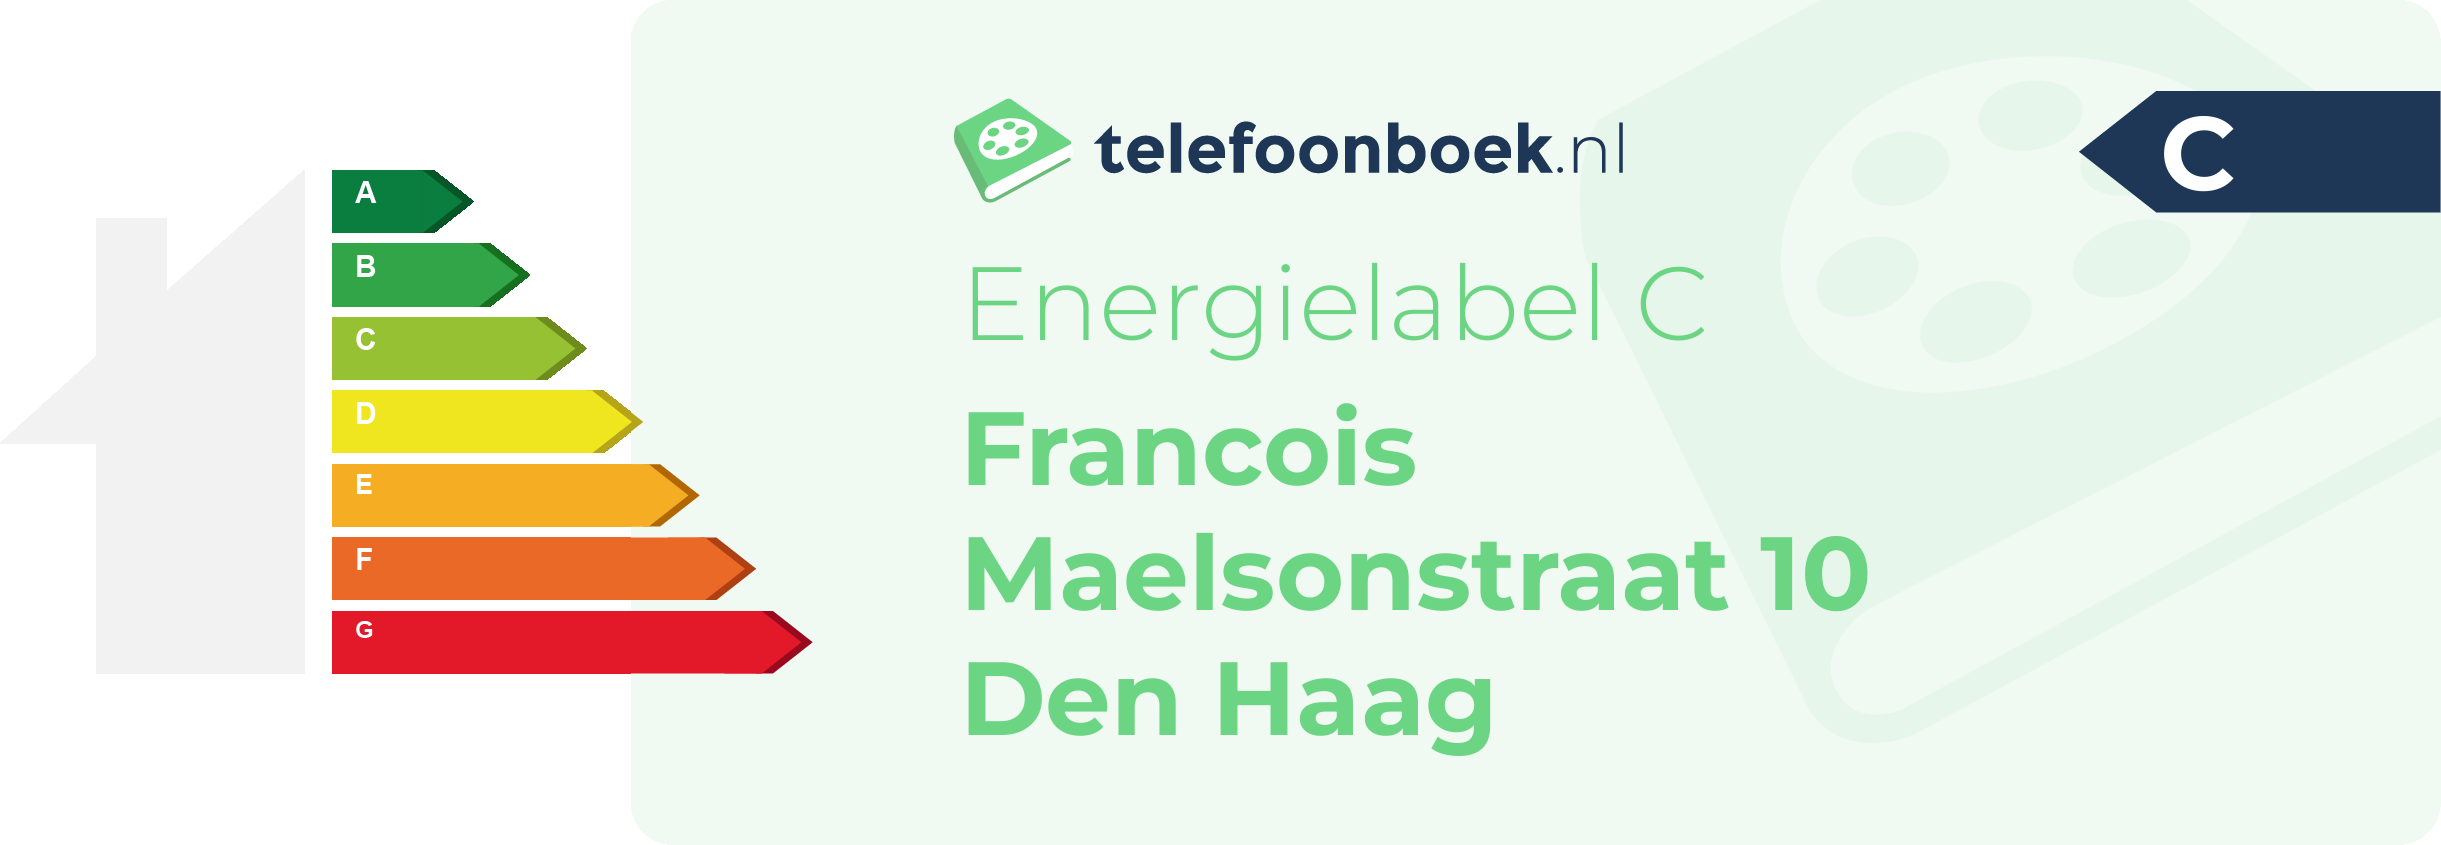 Energielabel Francois Maelsonstraat 10 Den Haag